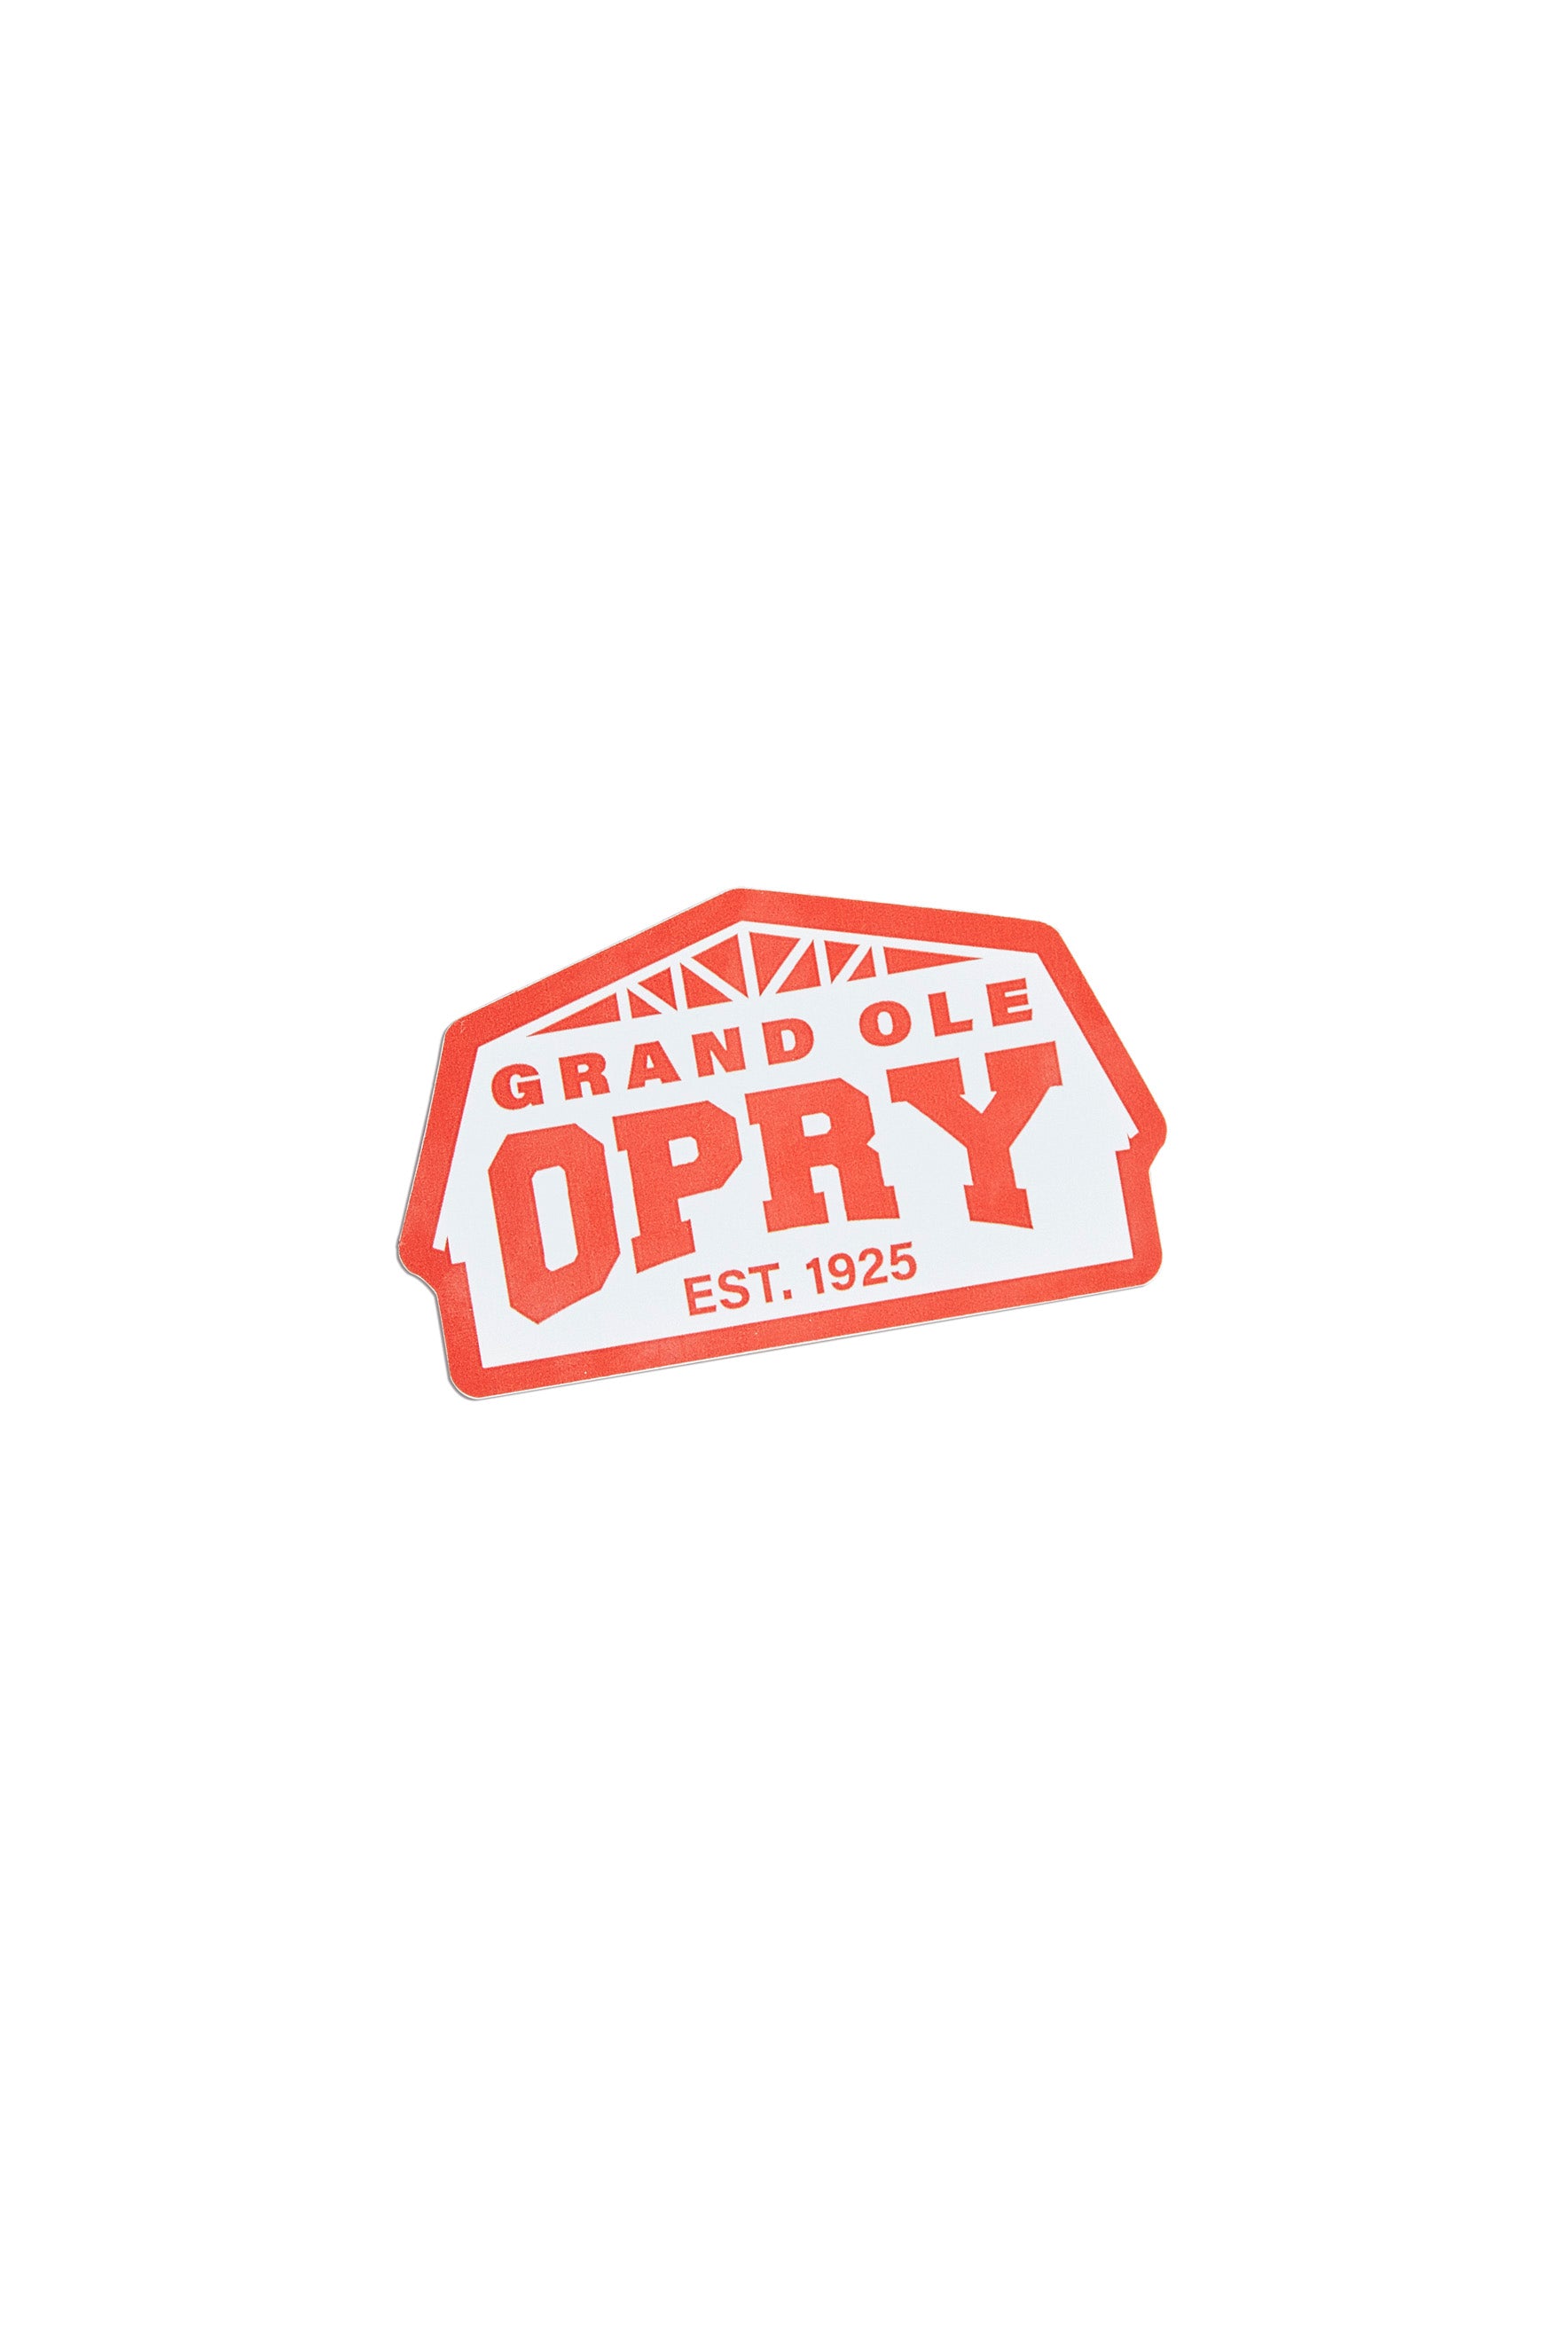 Opry Barn Bumper Sticker